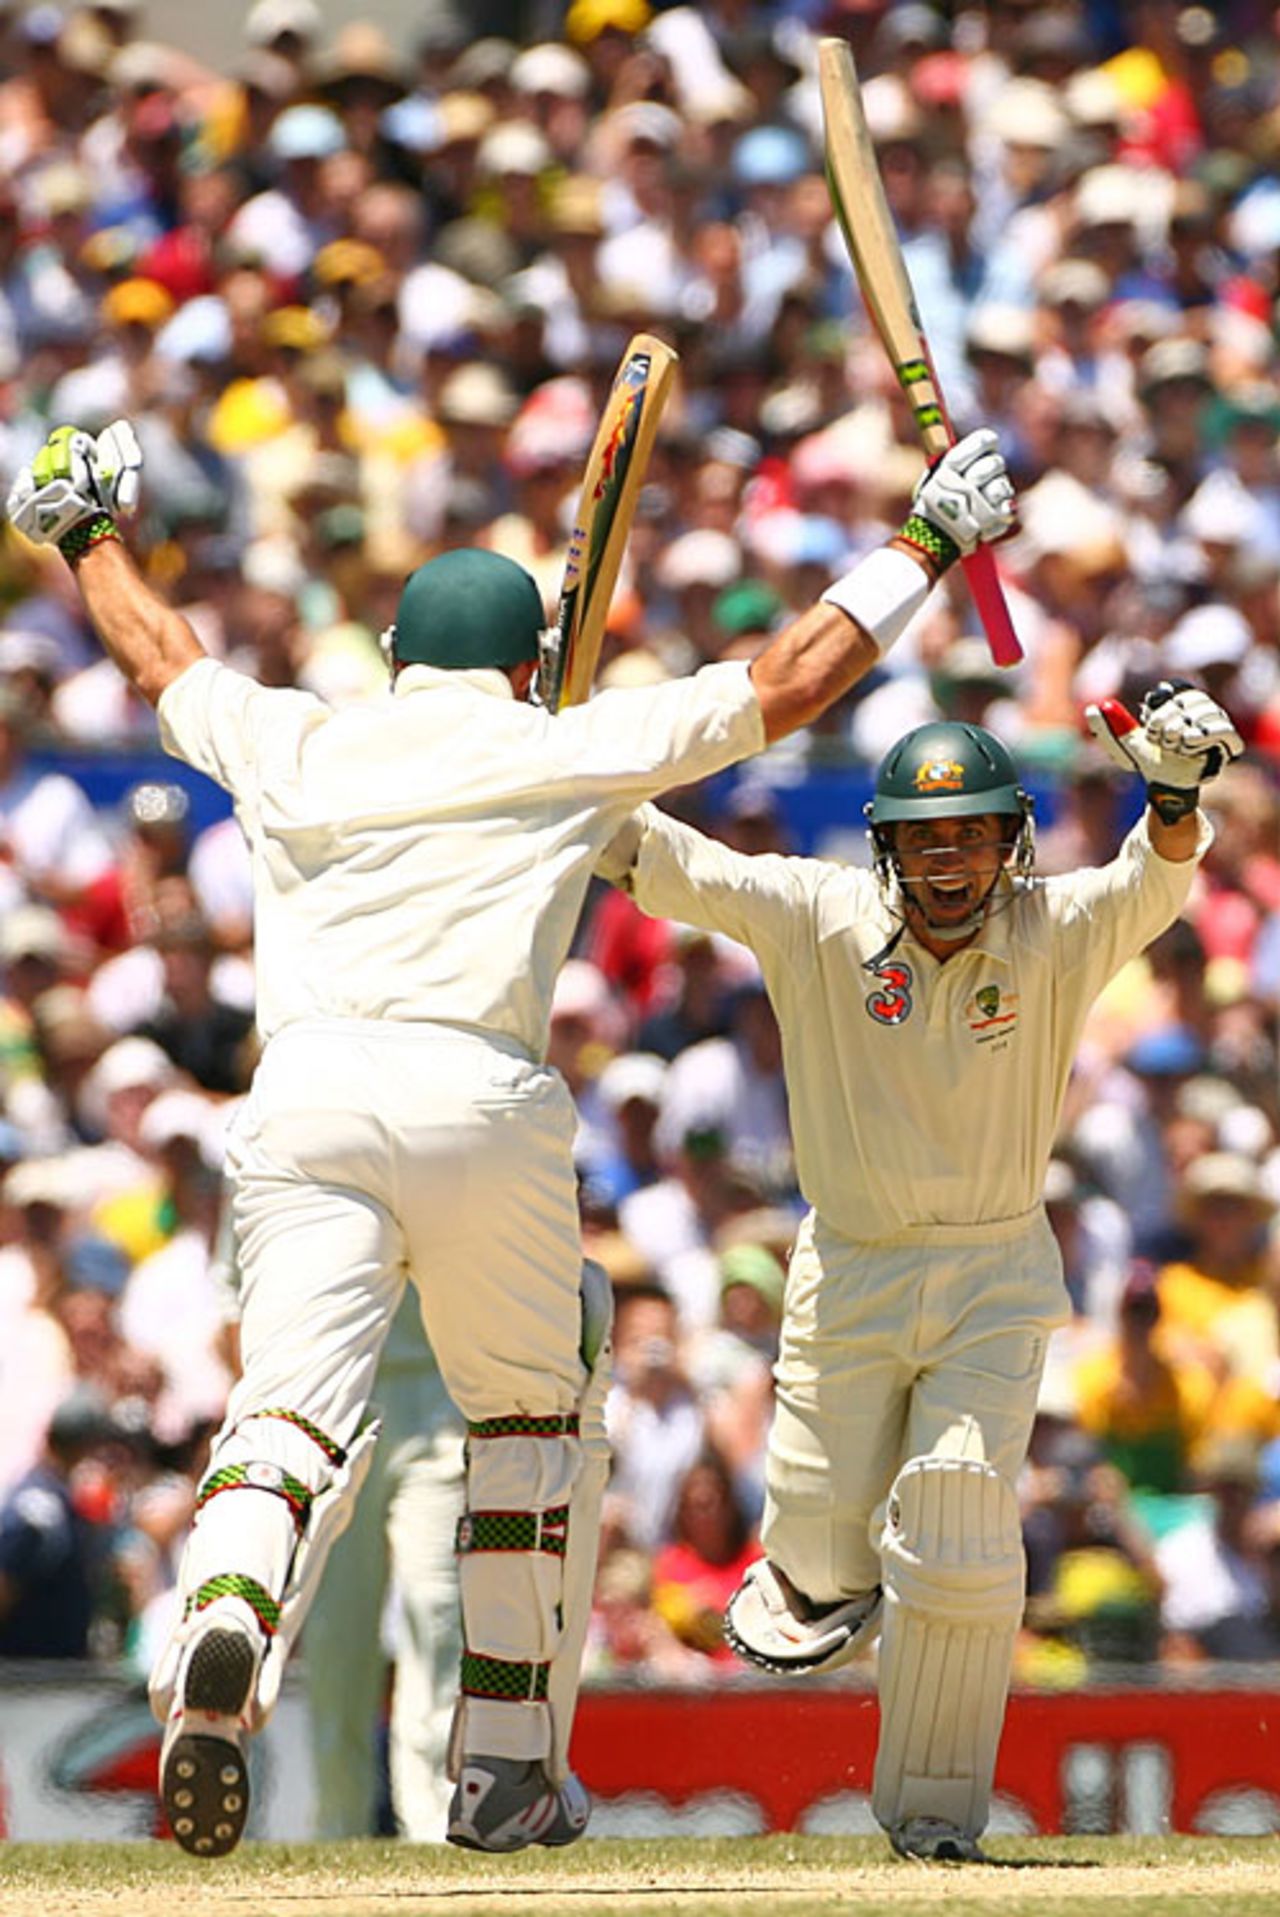 The winning moment: Justin Langer and Matthew Hayden, arms raised, celebrate Australia regaining the Ashes, Australia v England, 5th Test, Sydney, January 5, 2007